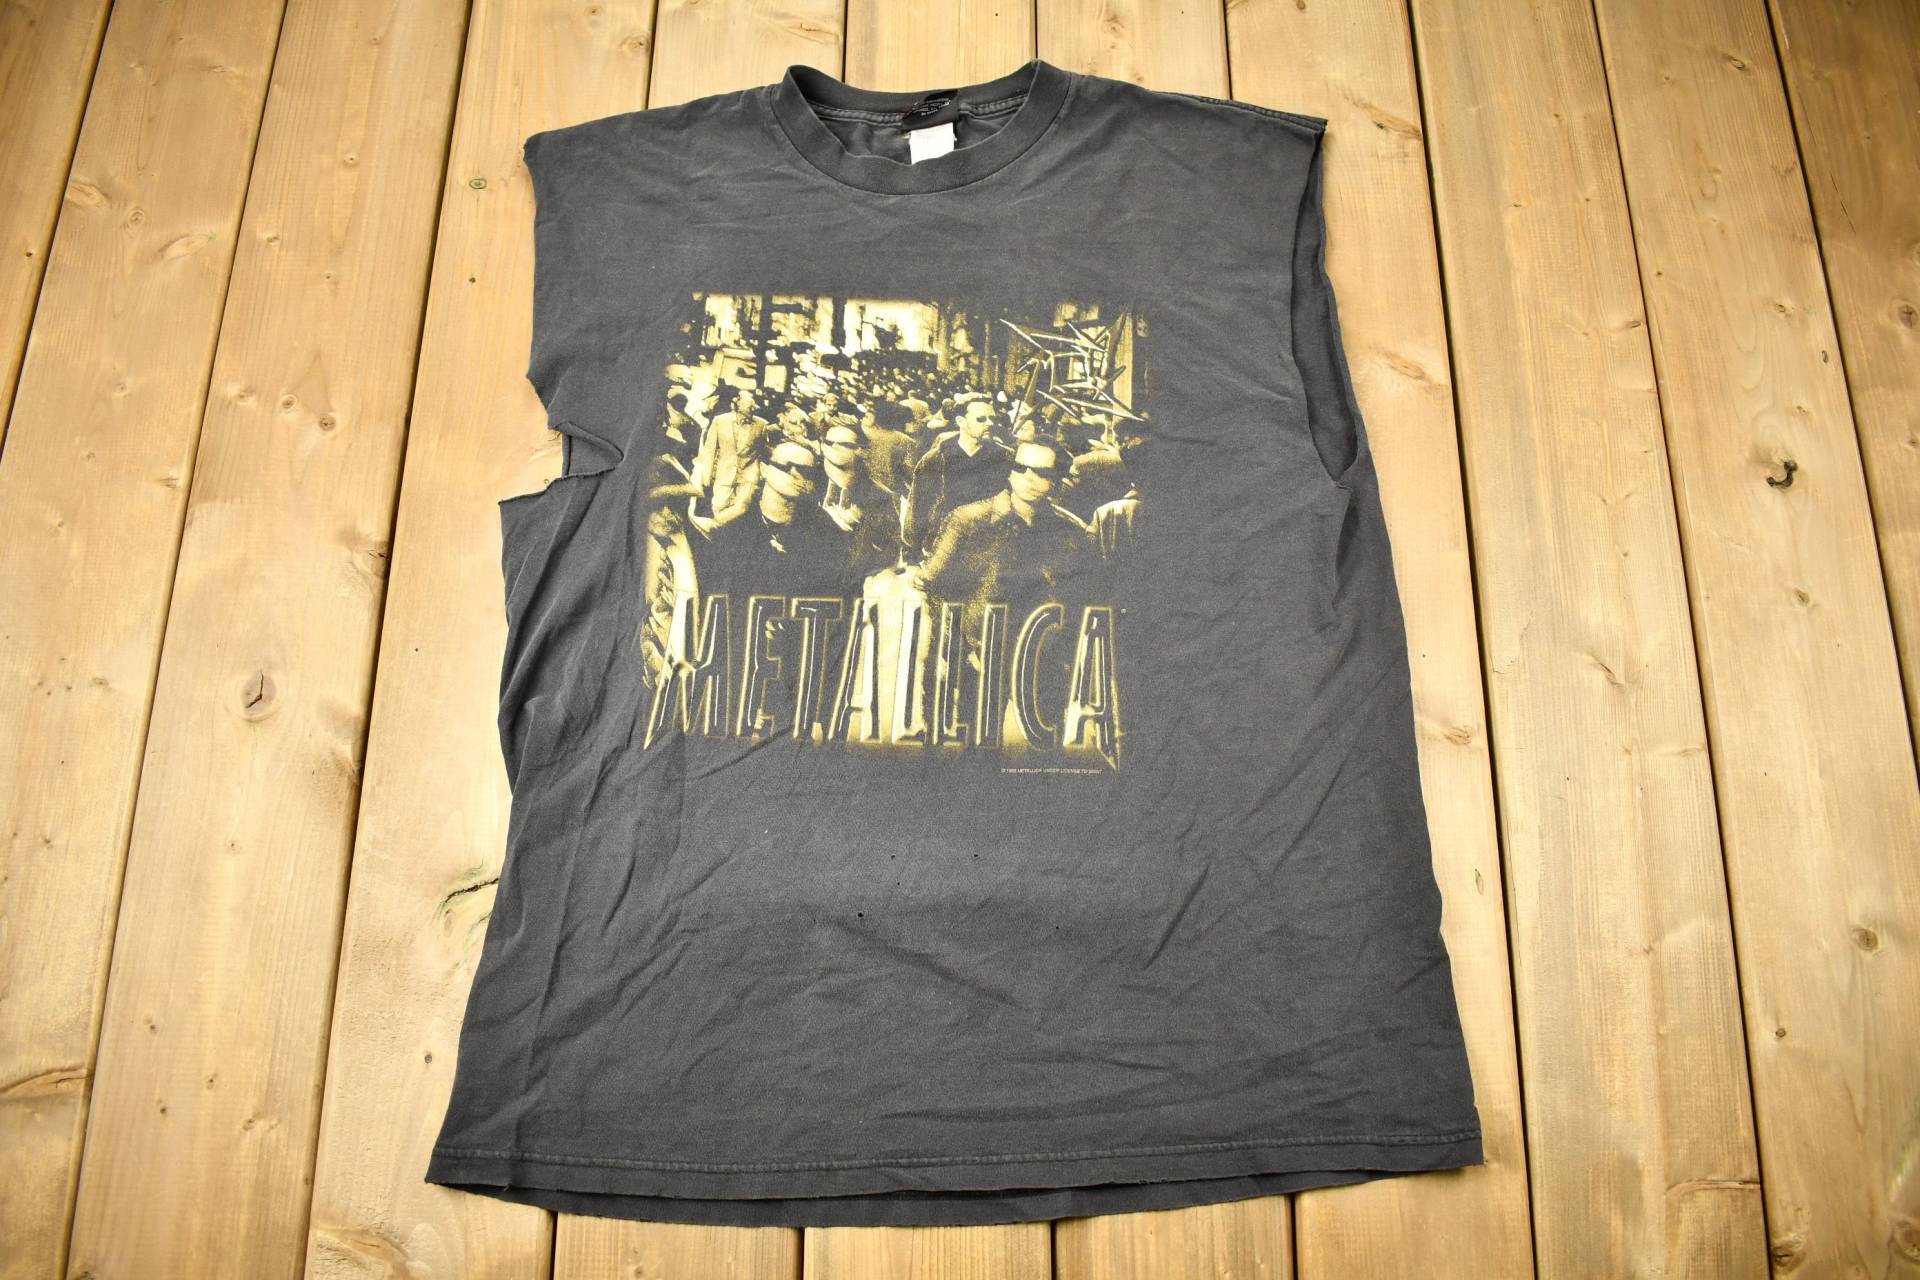 Vintage 1996 Metallica Graphic Band T-Shirt/T-Shirt Single Stitch Made in Usa Musik Promo Premium Giant Distressed von Lostboysvintage